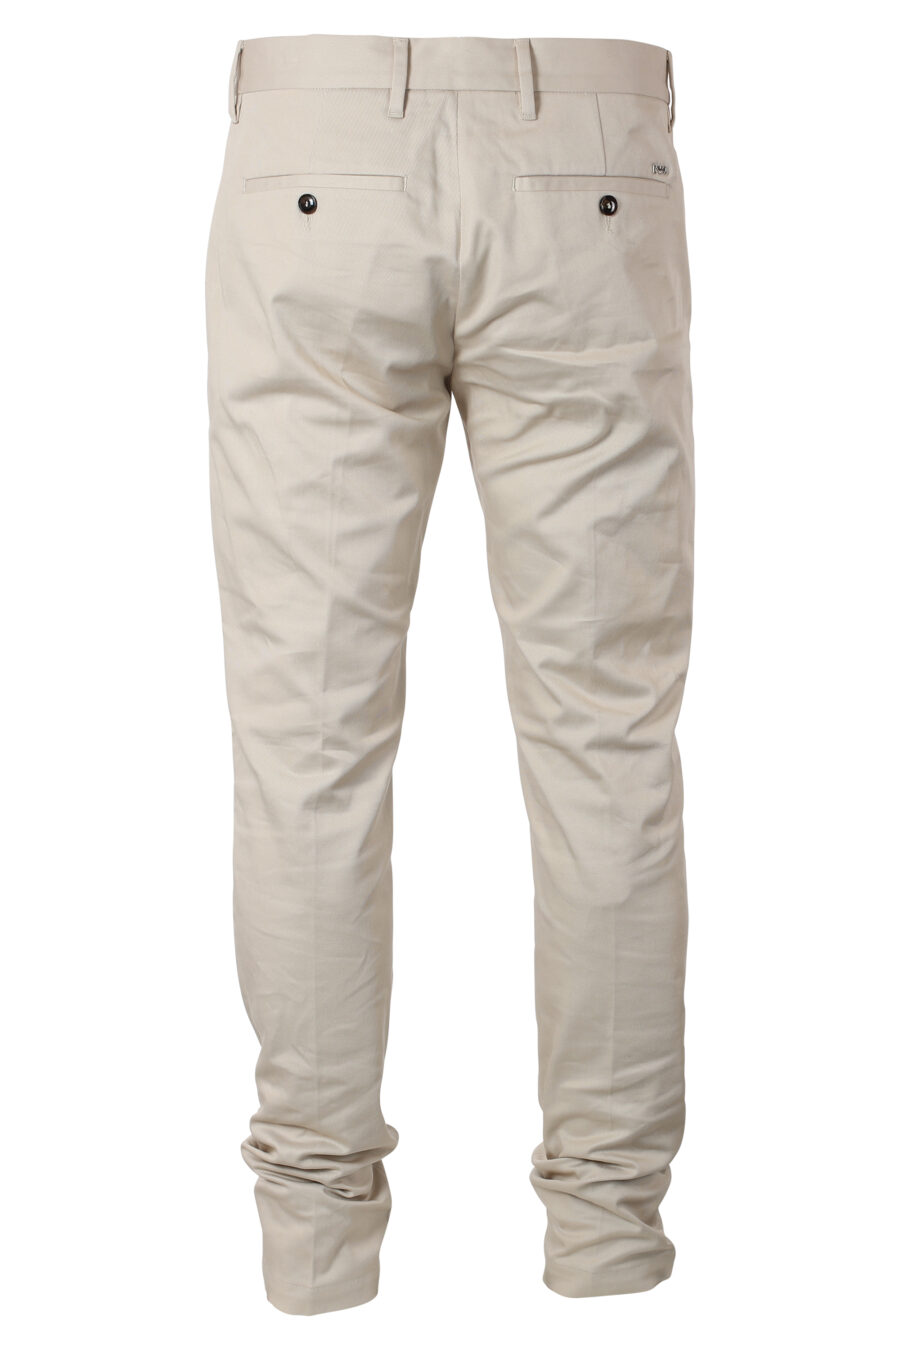 Pantalon beige avec logo - IMG 9953